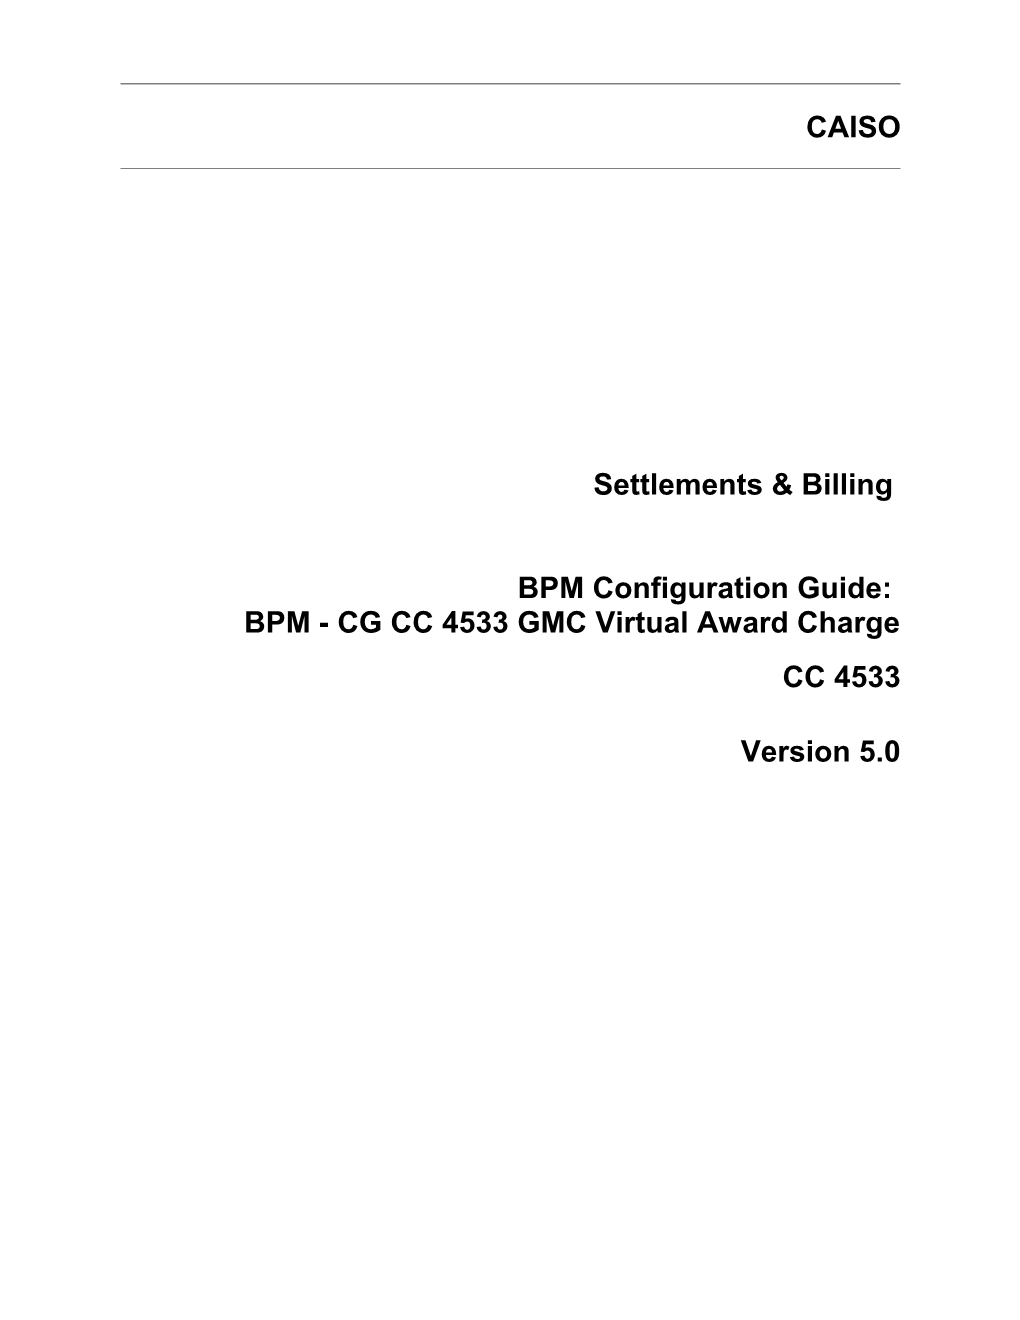 BPM - CG CC 4533 GMC Virtual Award Charge